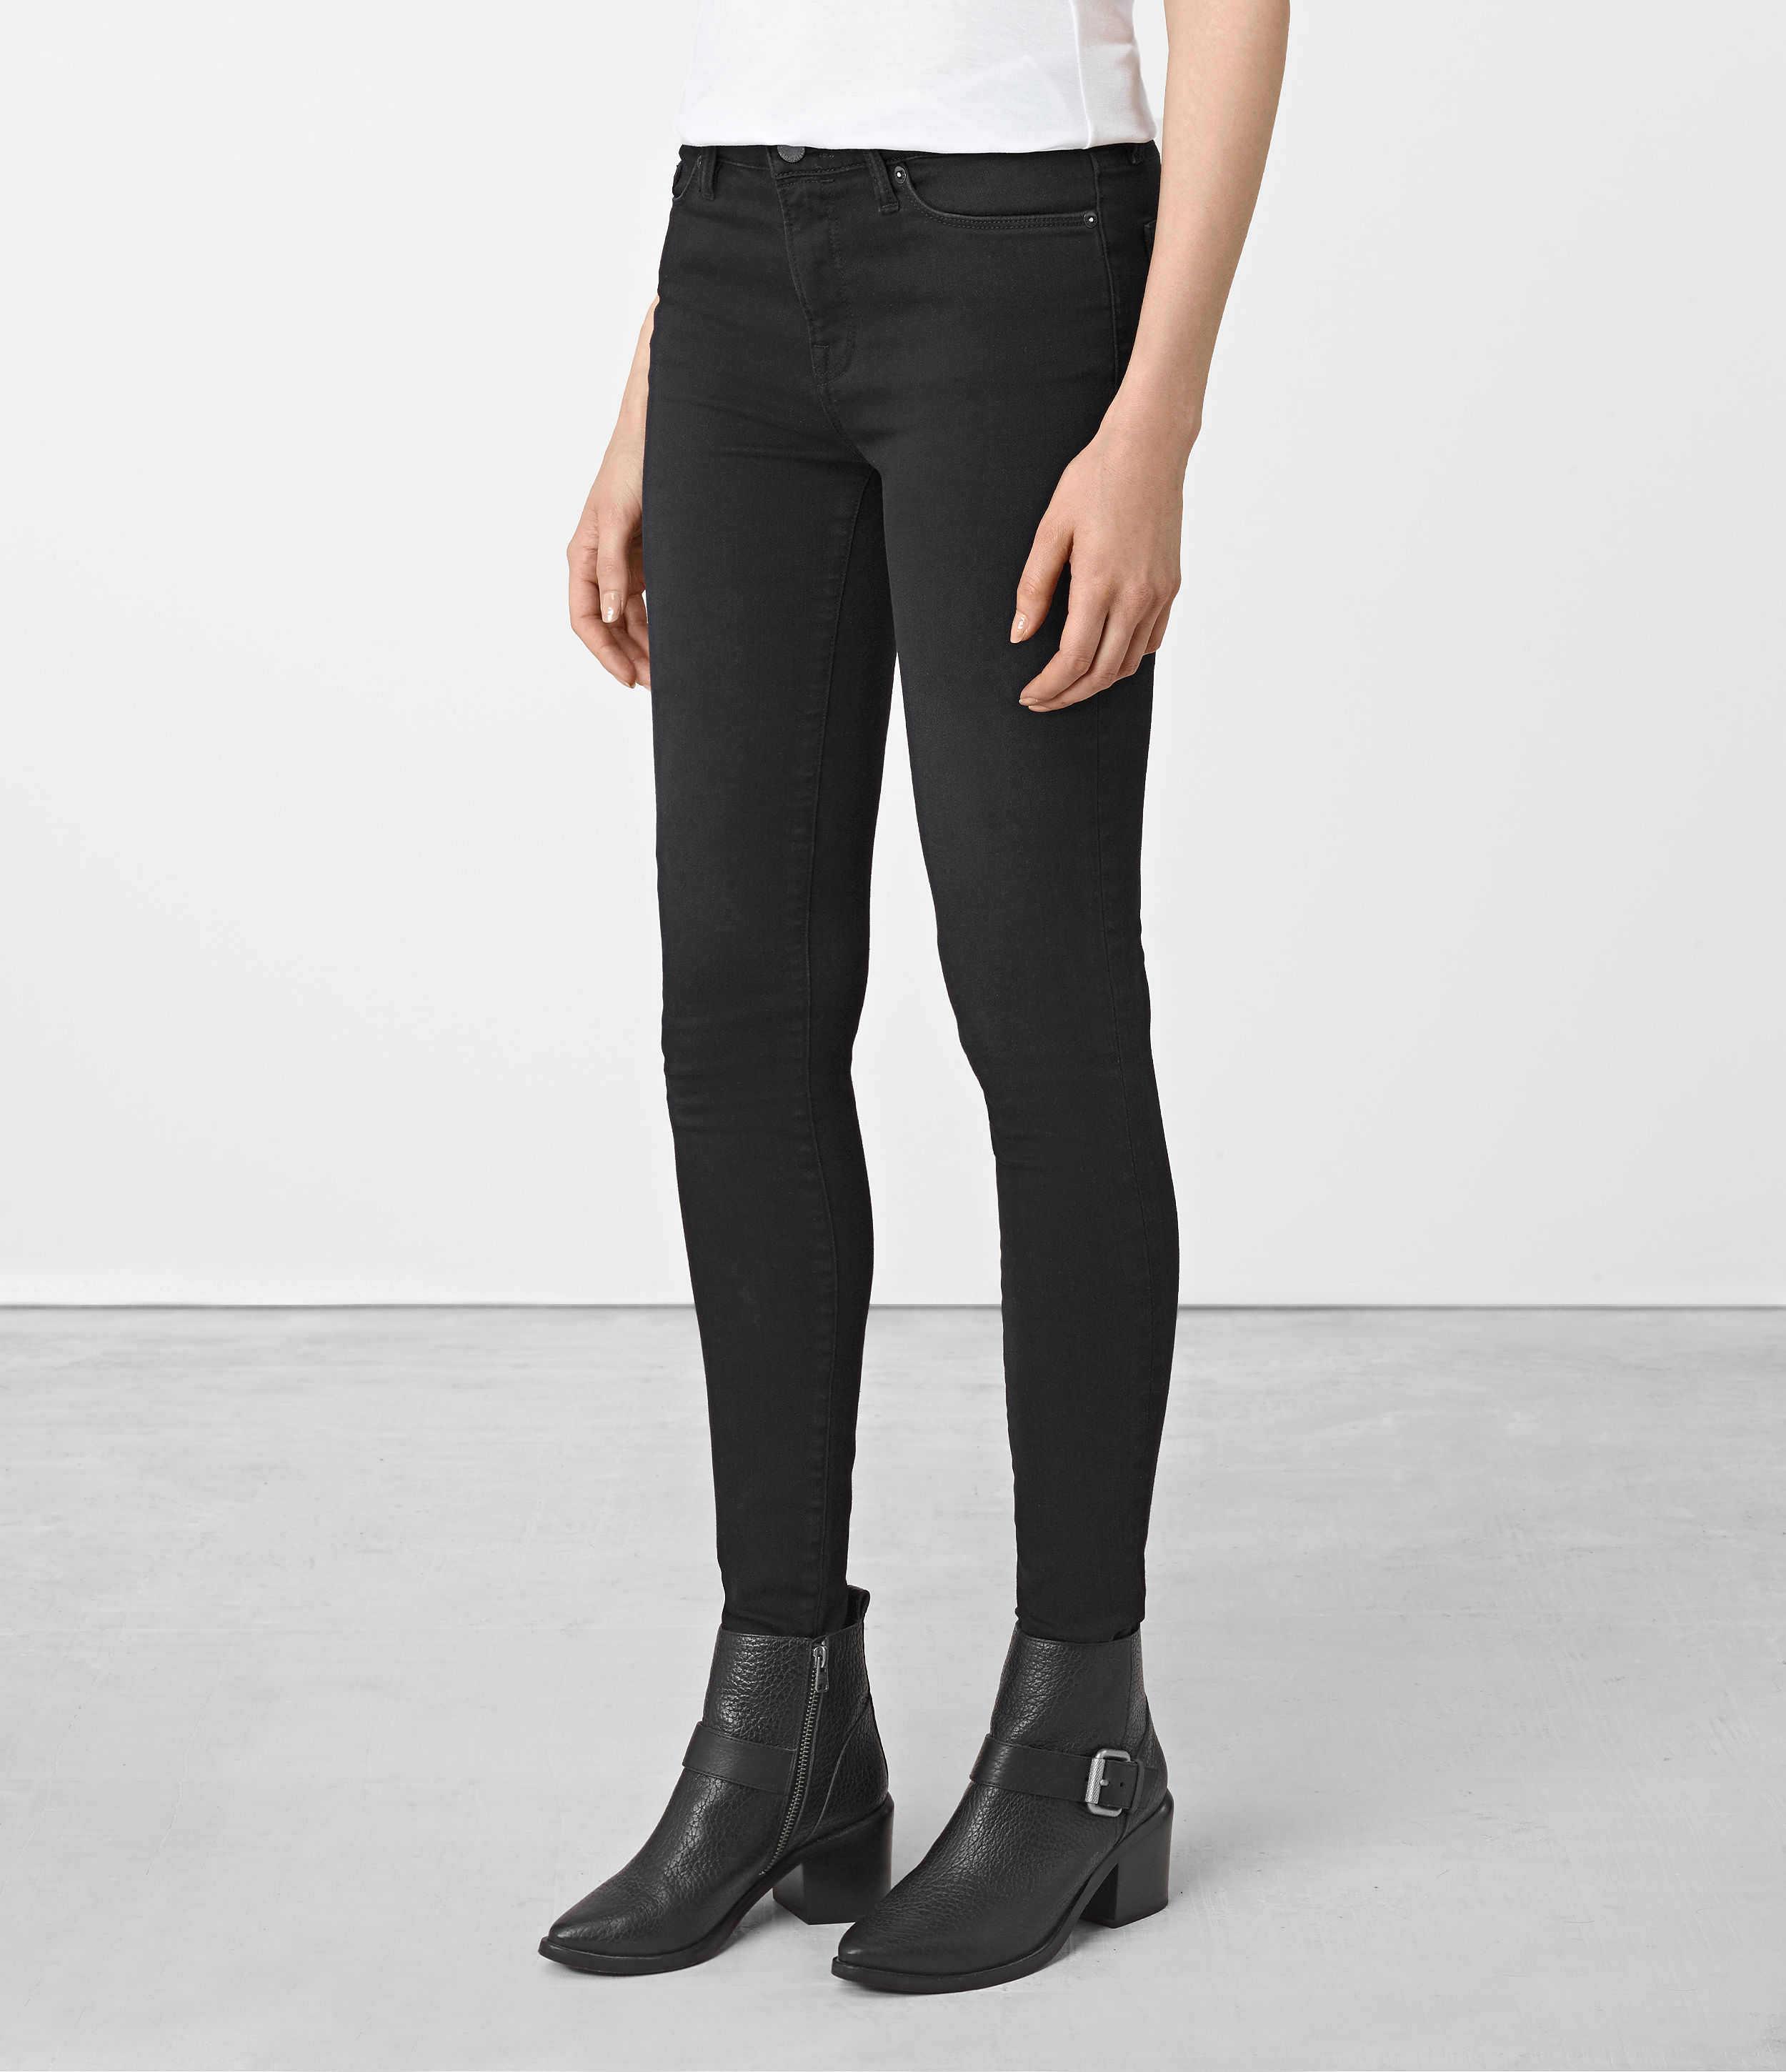 AllSaints Denim Grace Jeans in Soft Black (Black) - Lyst